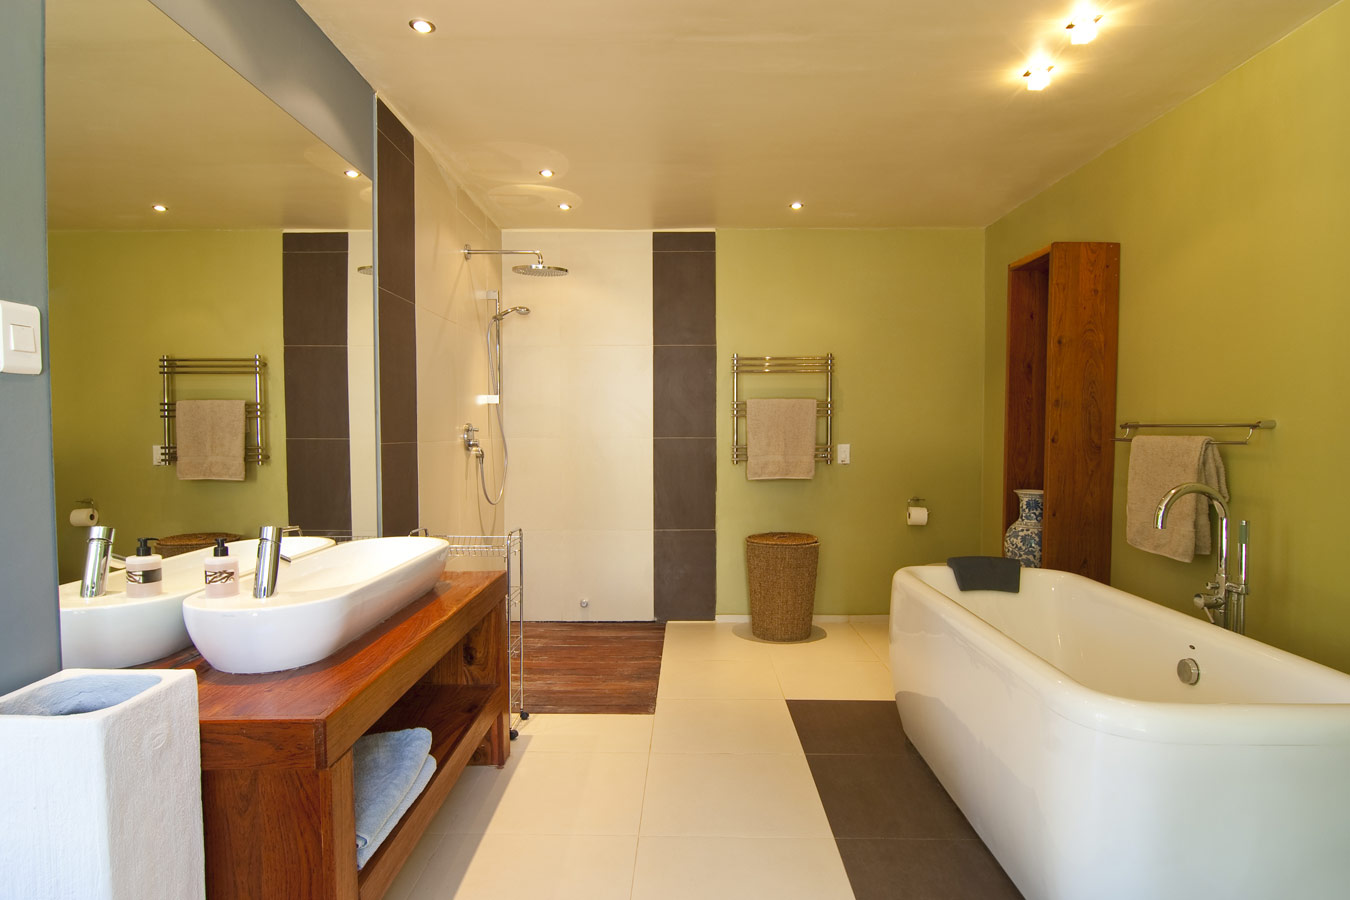 Groene badkamer met tegels en parket